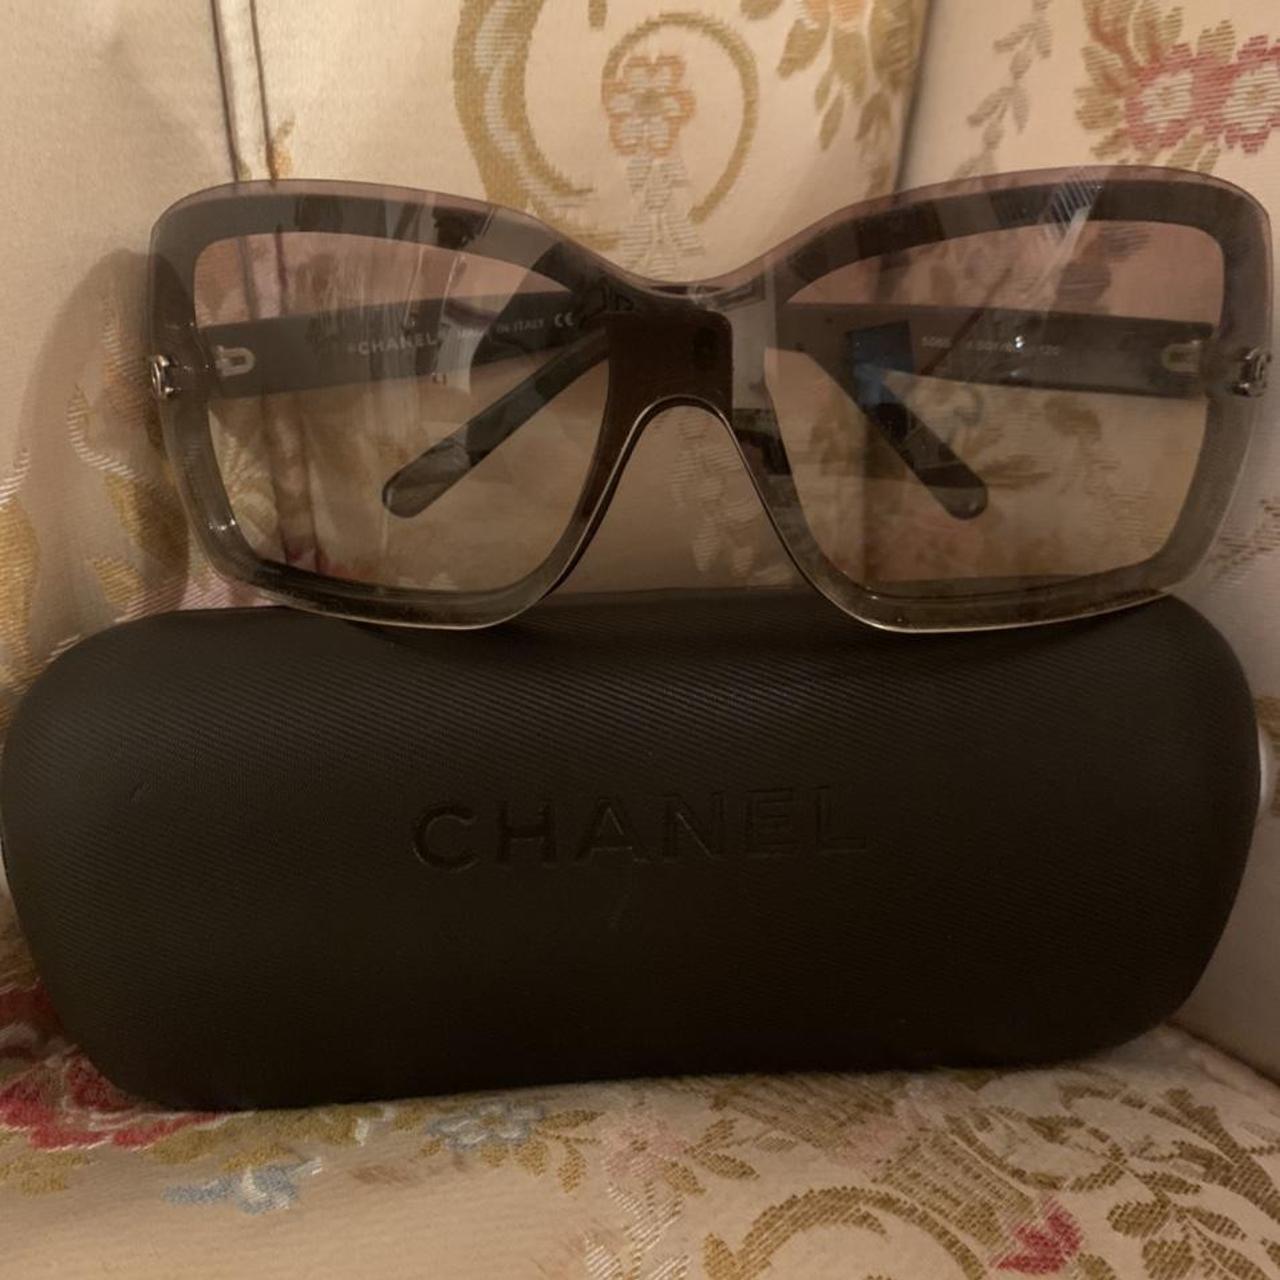 Authentic Chanel Sunglasses, monogram CC logos